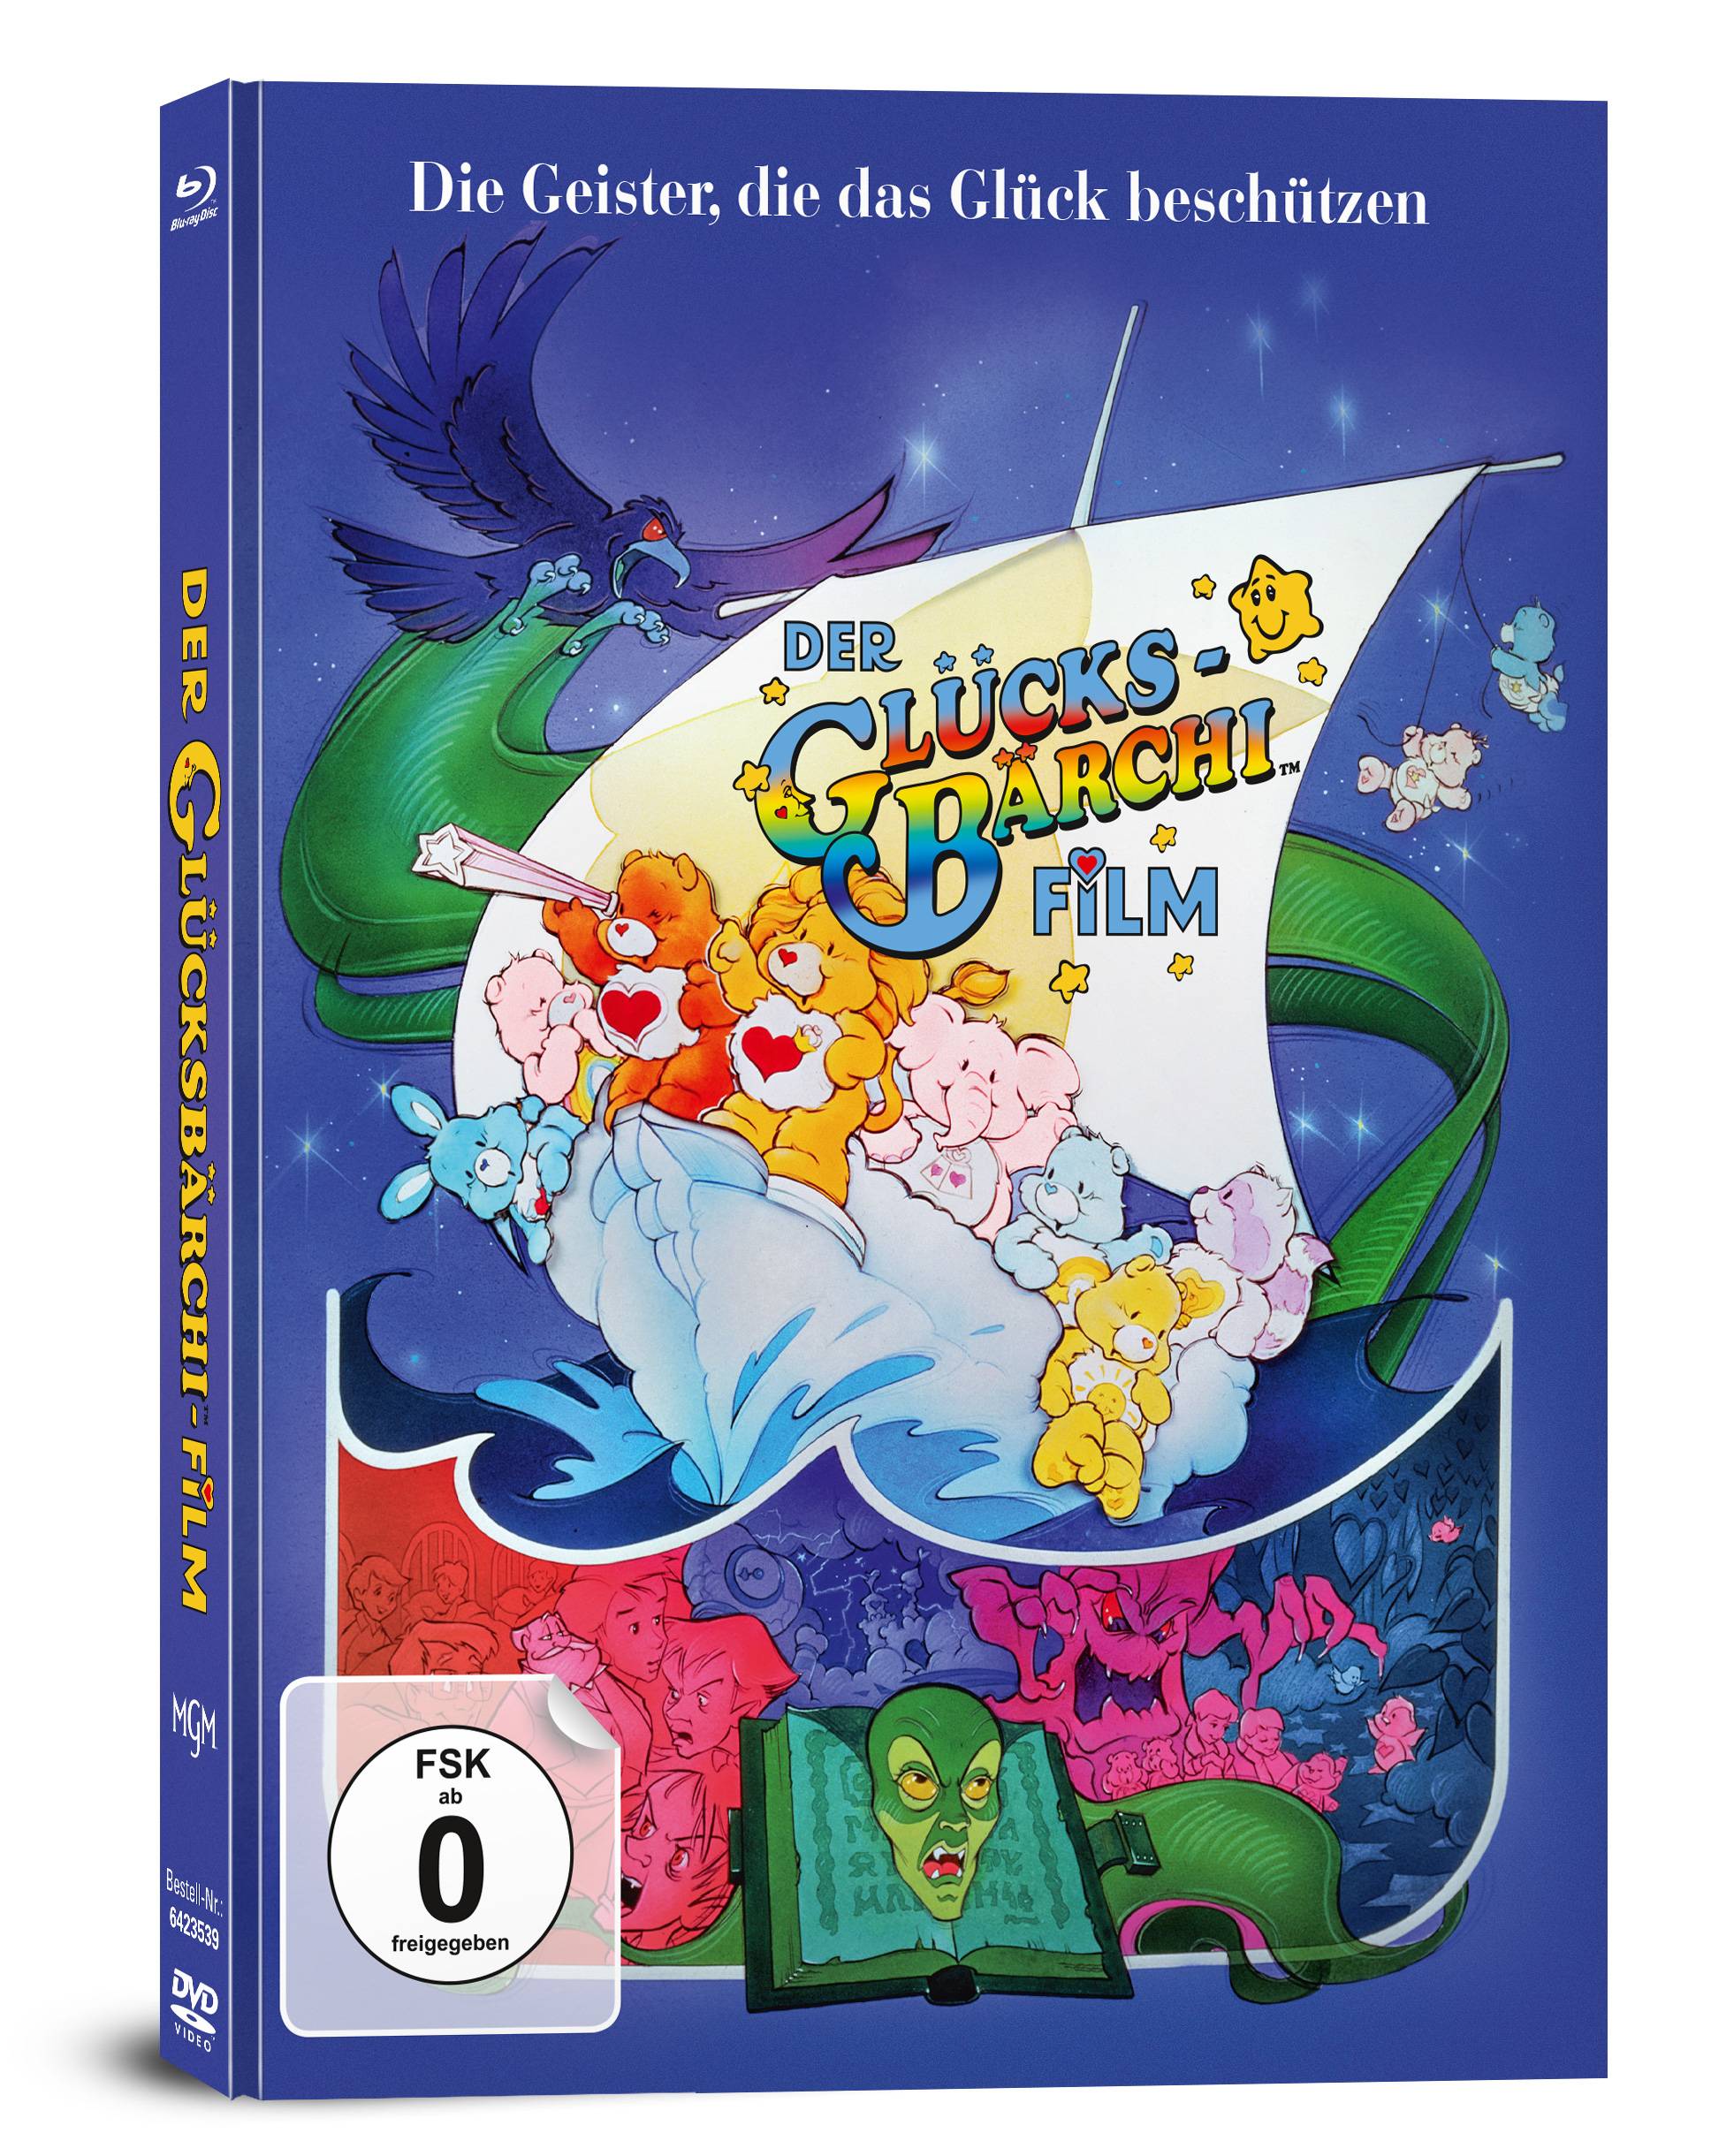 Der Glücksbärchi-Film - 2-Disc Limited Collector's Edition im Mediabook (Blu-ray + DVD)